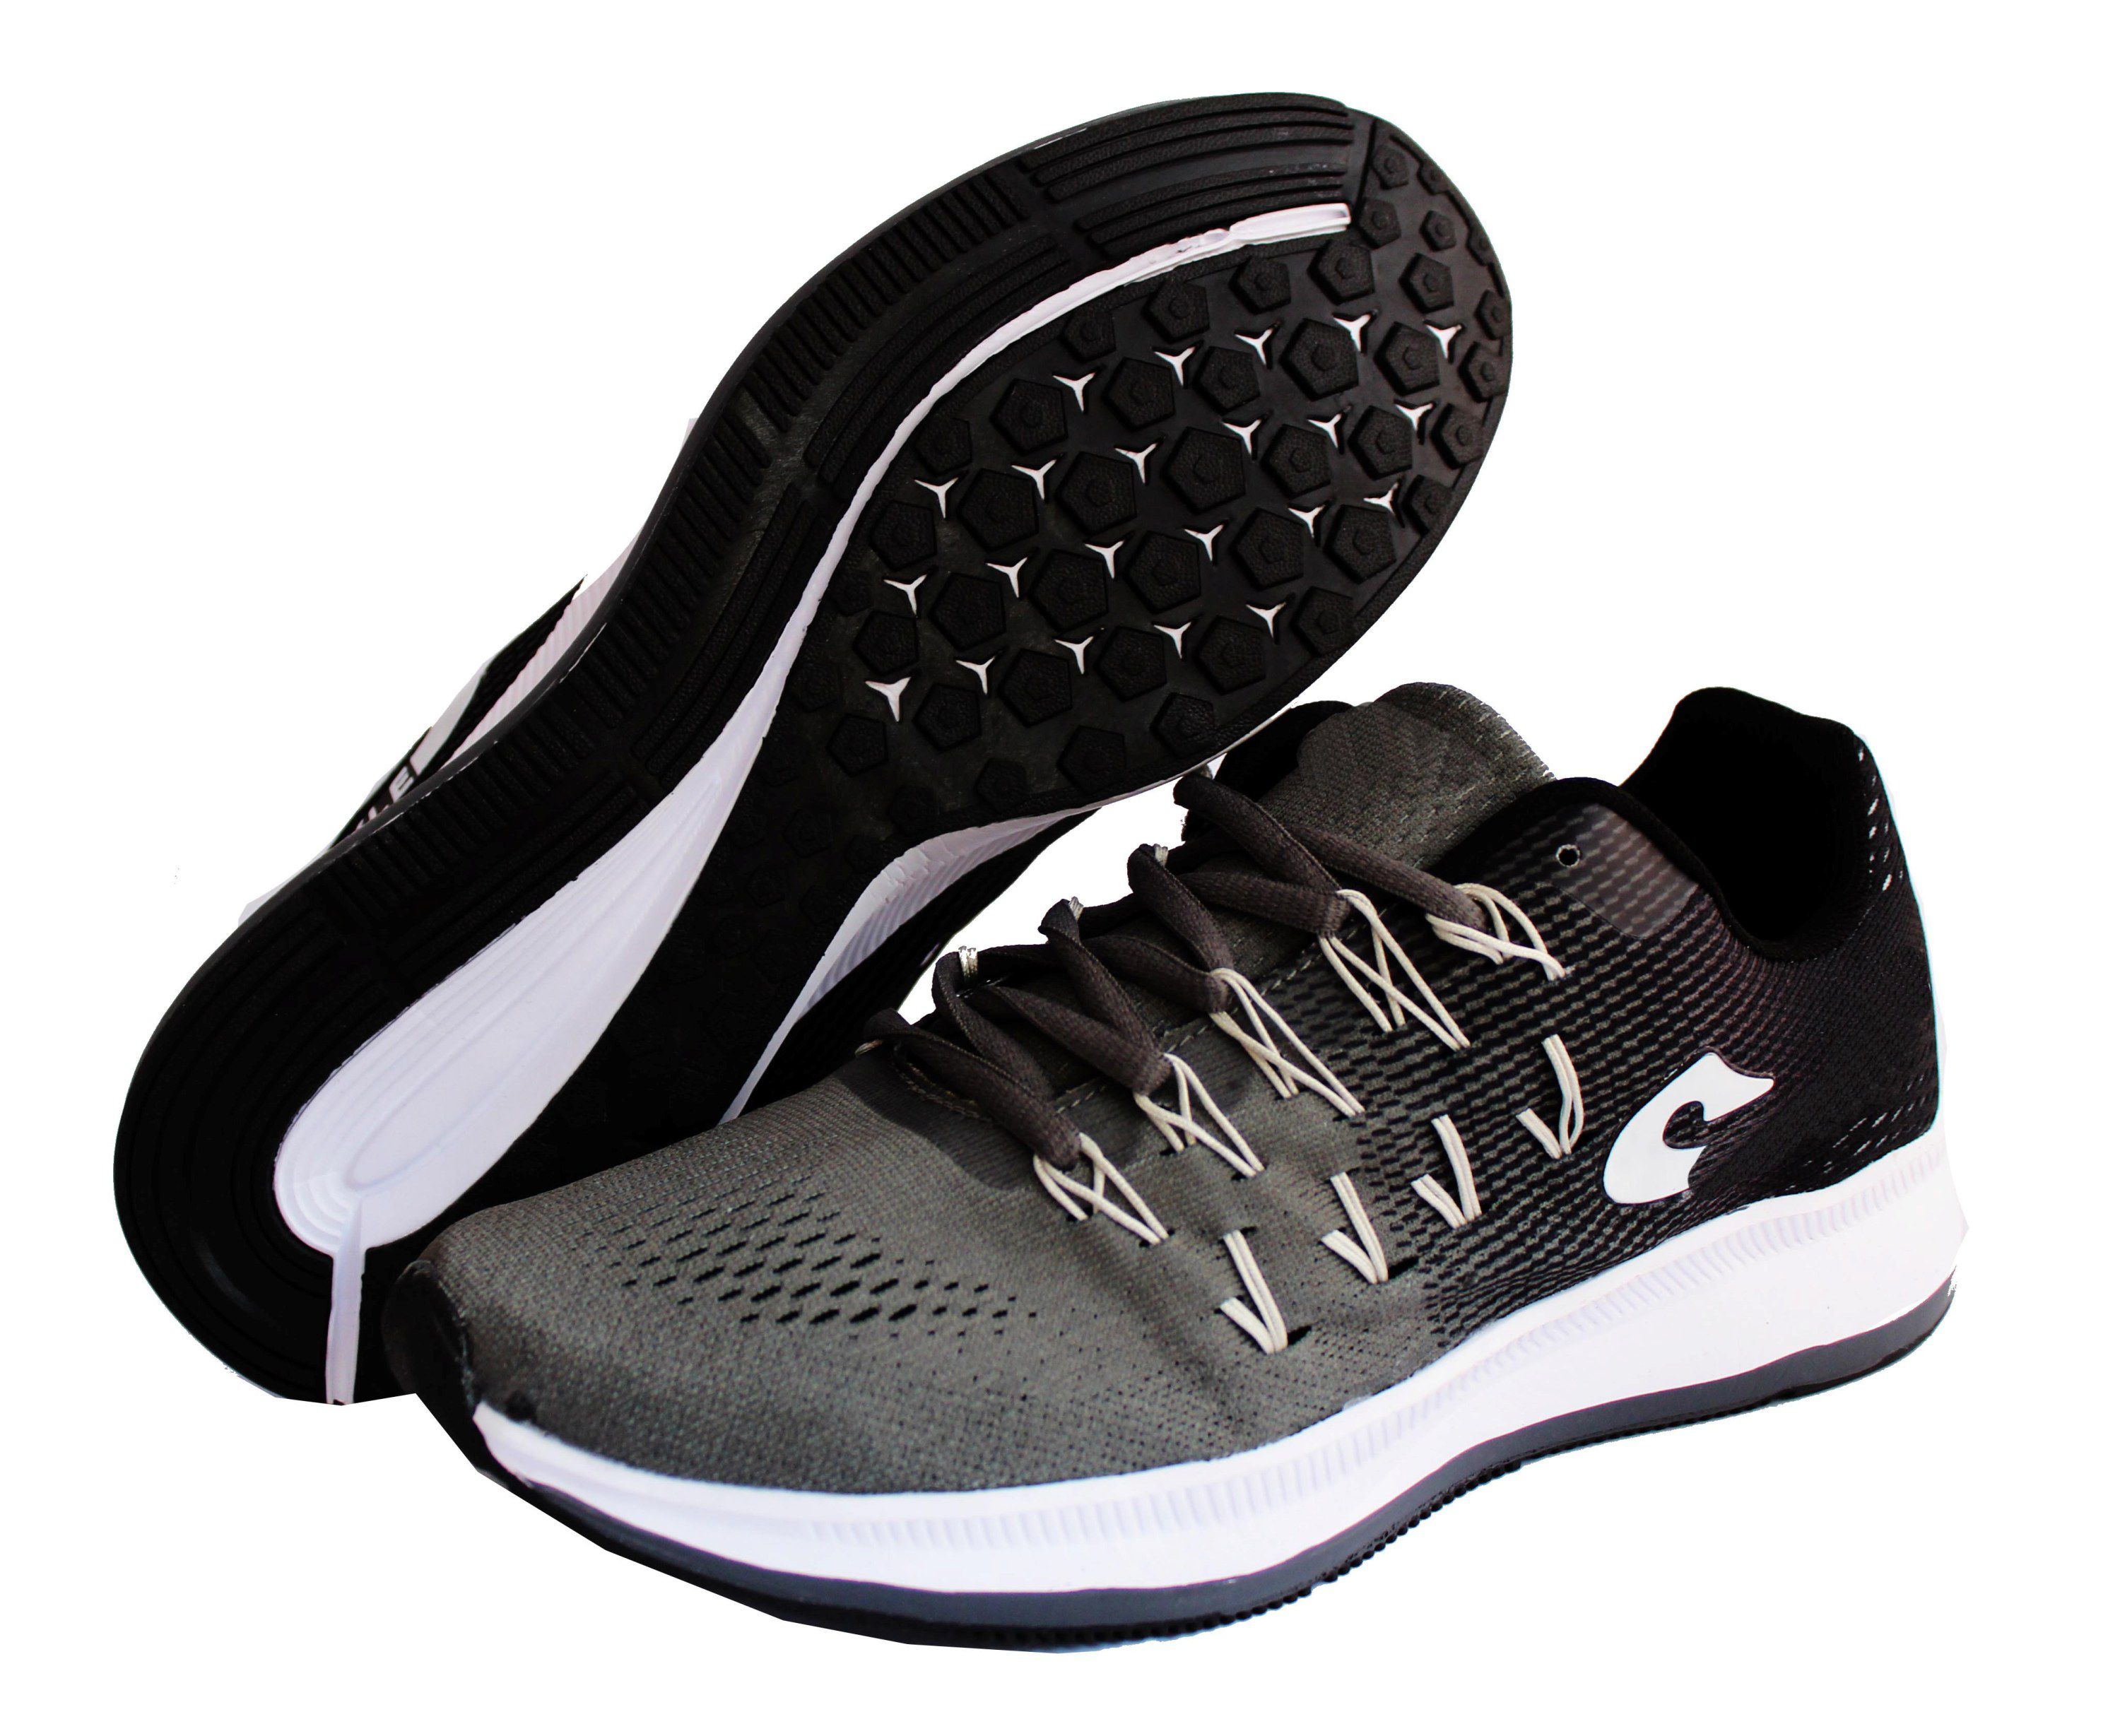 Max Air Pro SP 8852 Gray Running Shoes - Buy Max Air Pro SP 8852 Gray ...